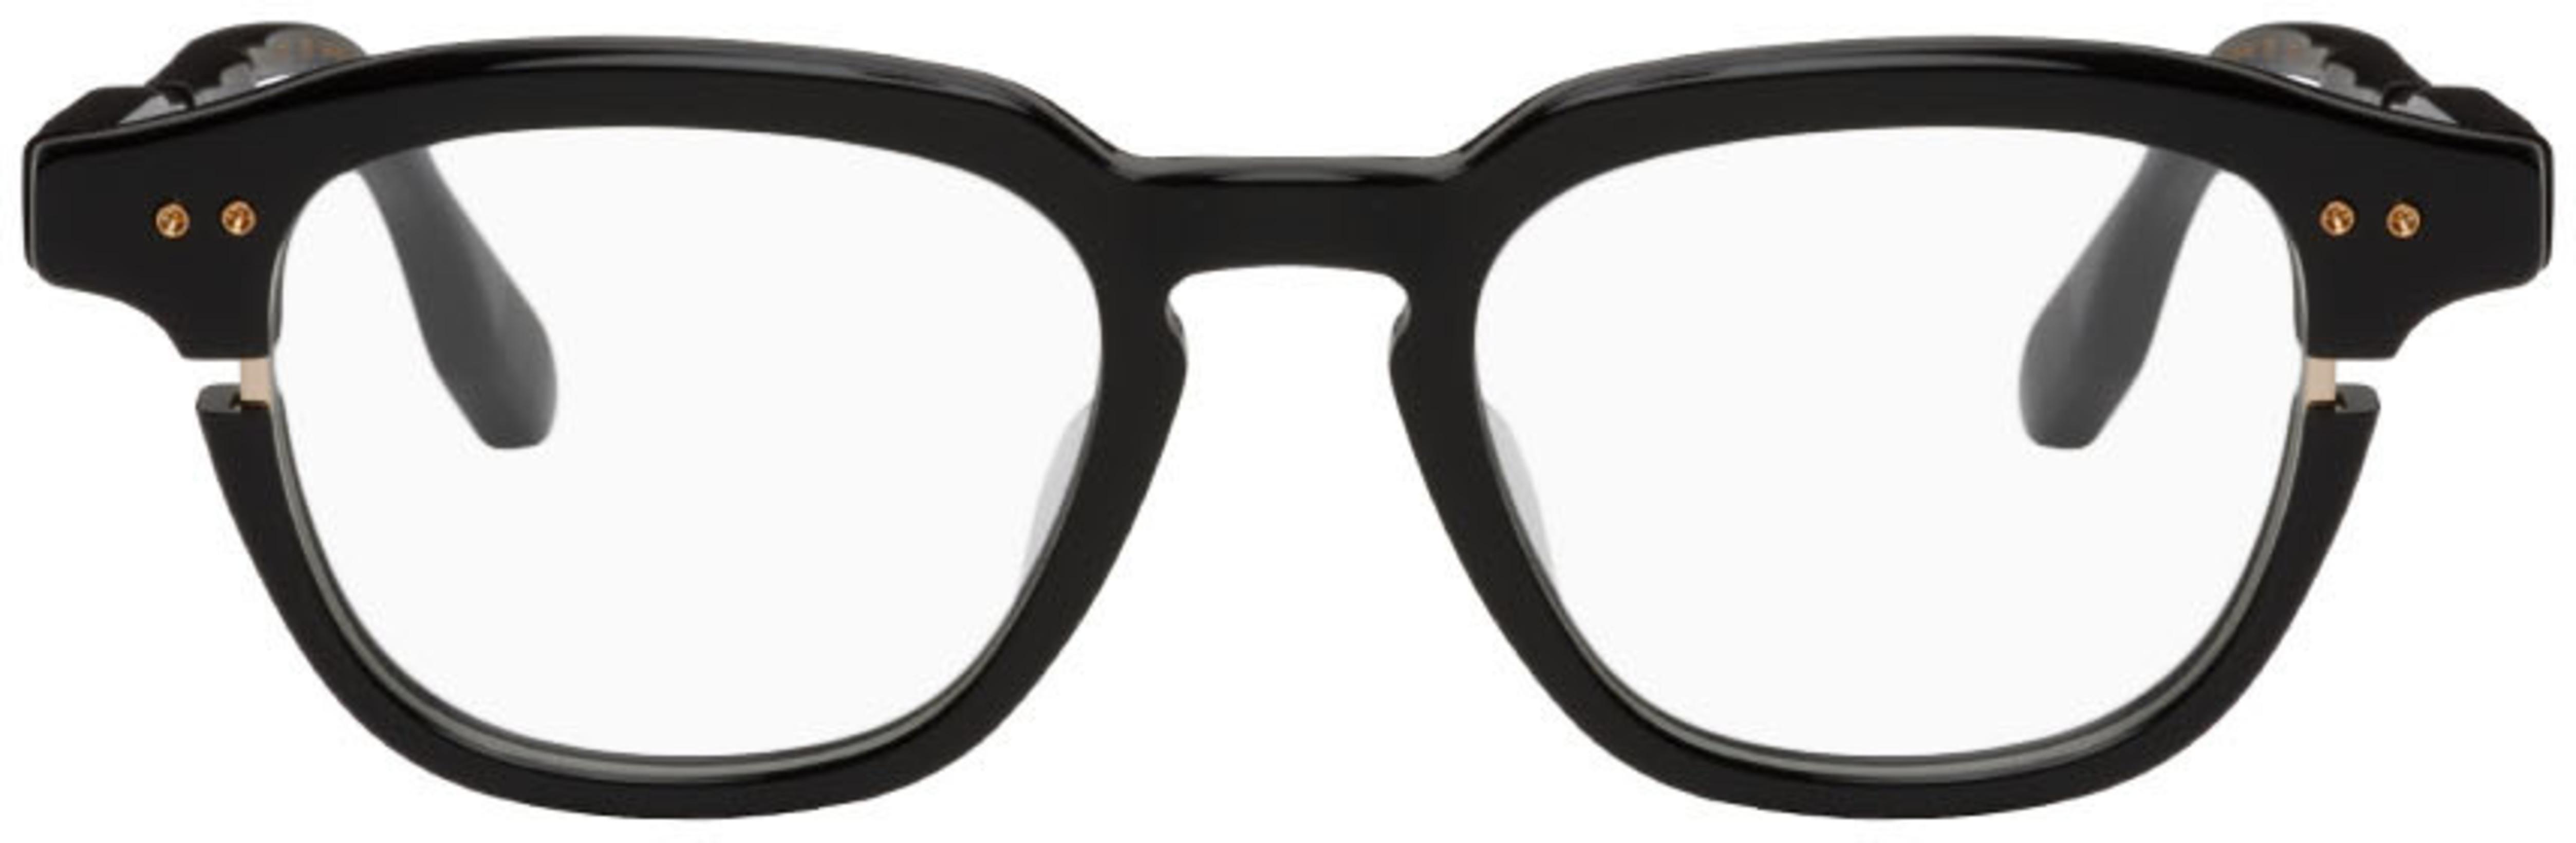 Black Lineus Glasses by DITA